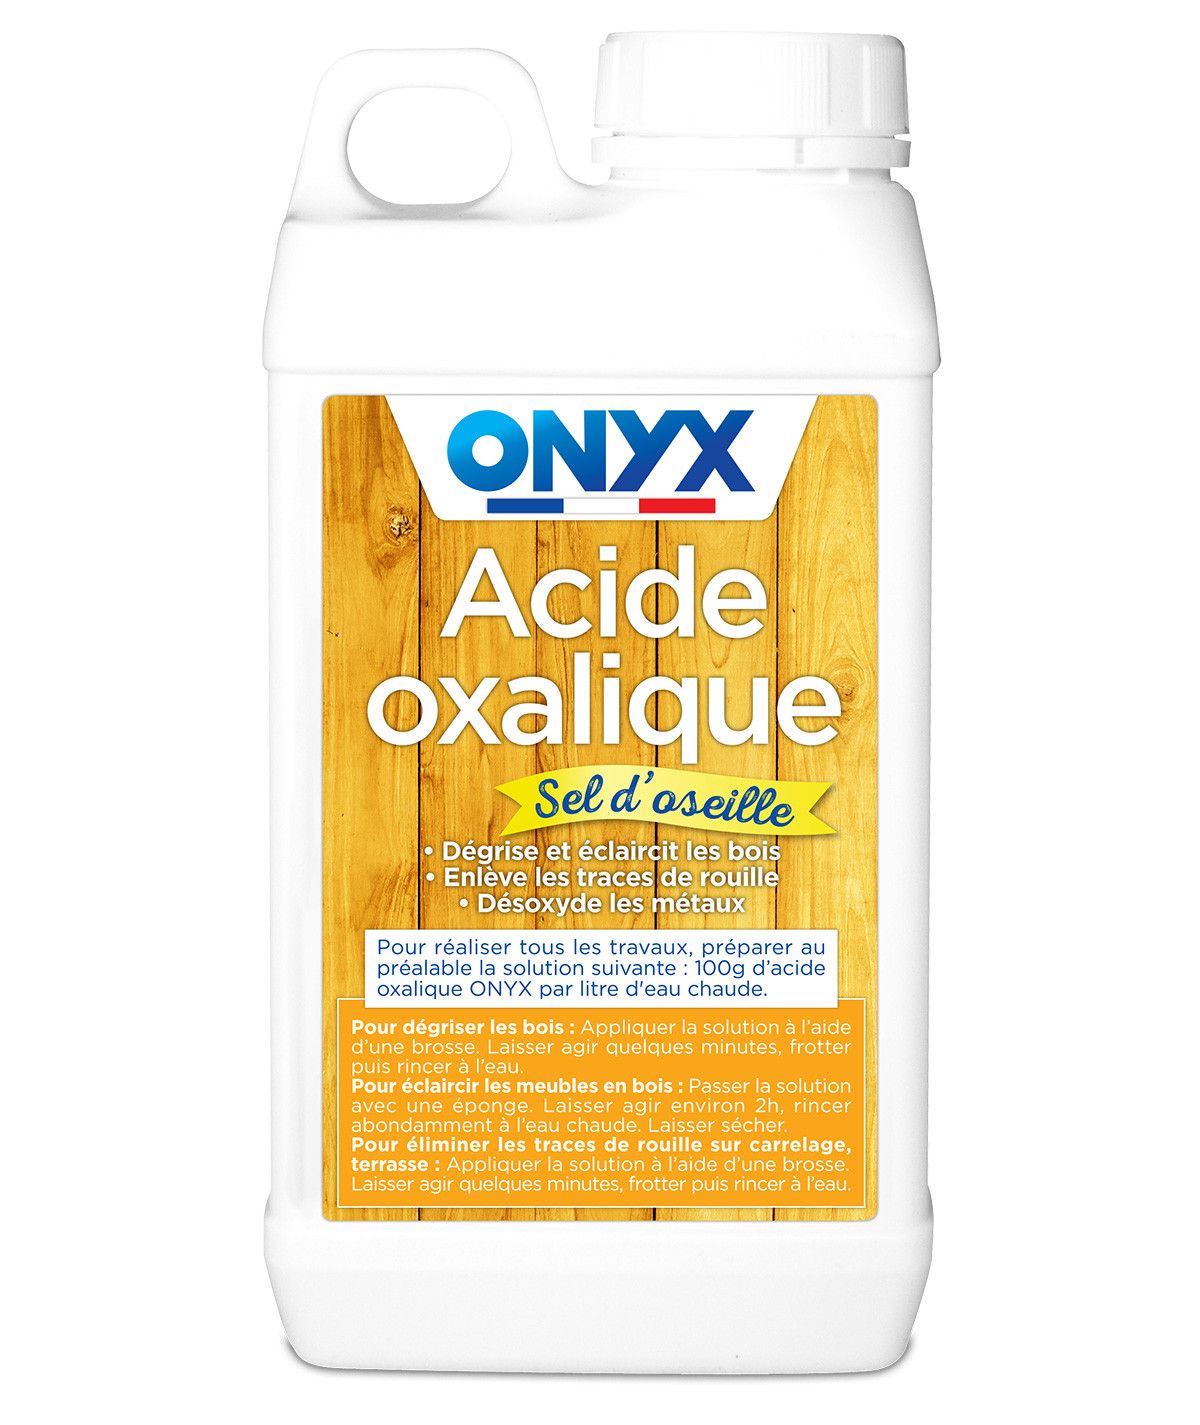 https://onyxbricolage.fr/974-large_default/acide-oxalique-750g.jpg